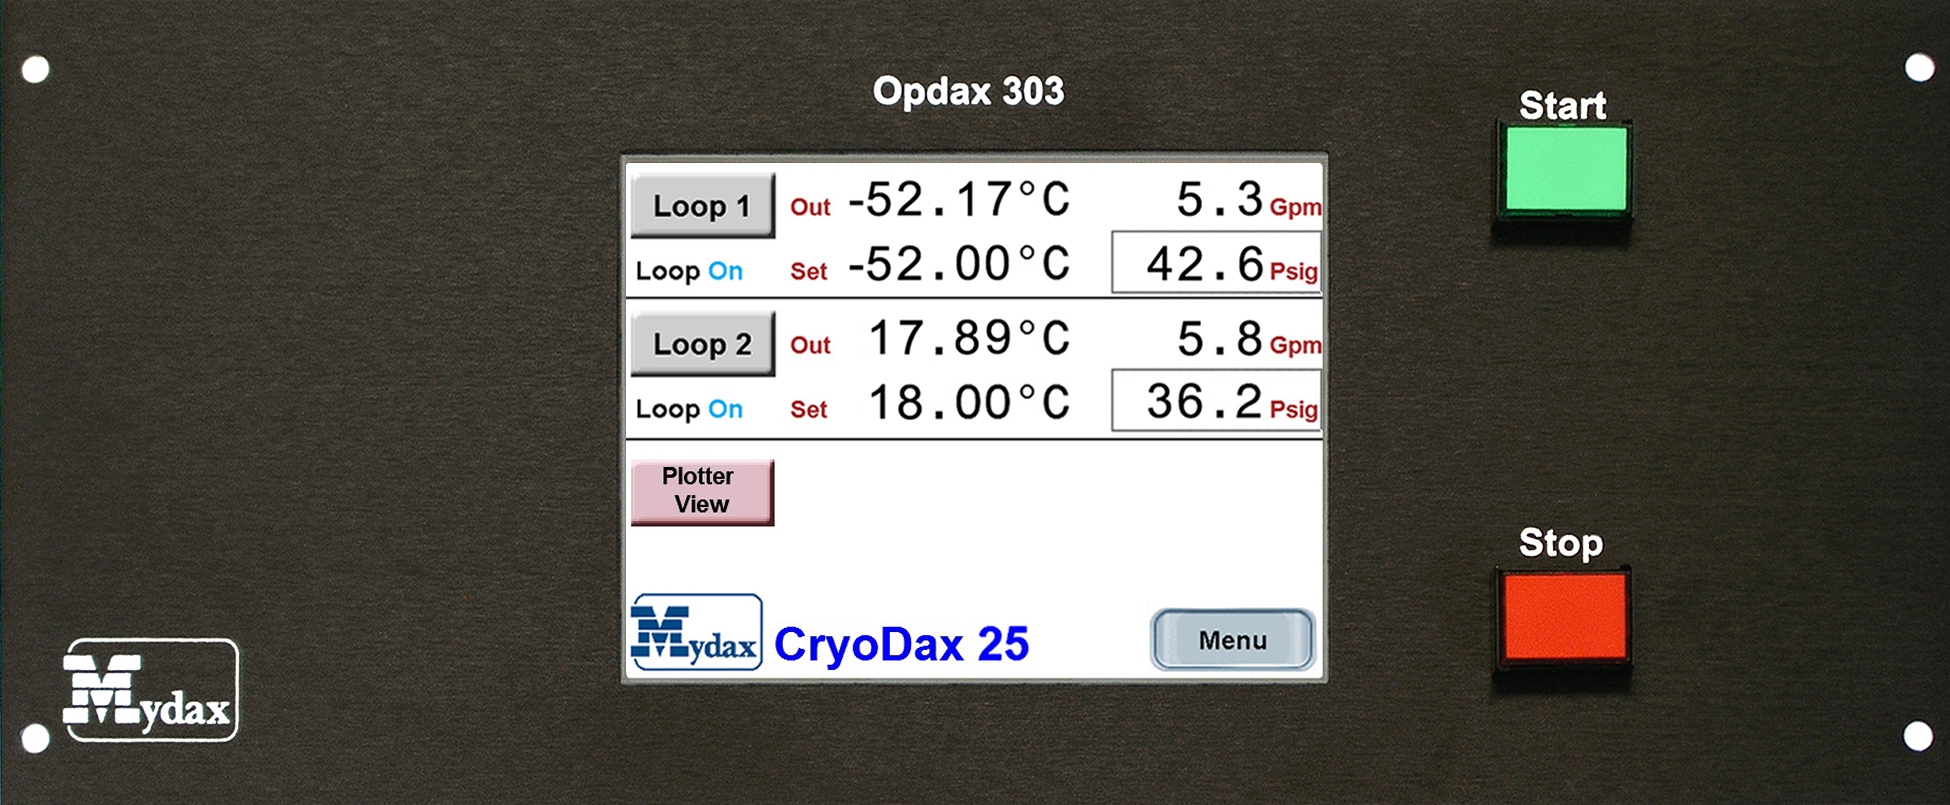 Mydax Opdax 303 Process Control Liquid Chiller Controller (shown on CryoDax 25 2-loop System)